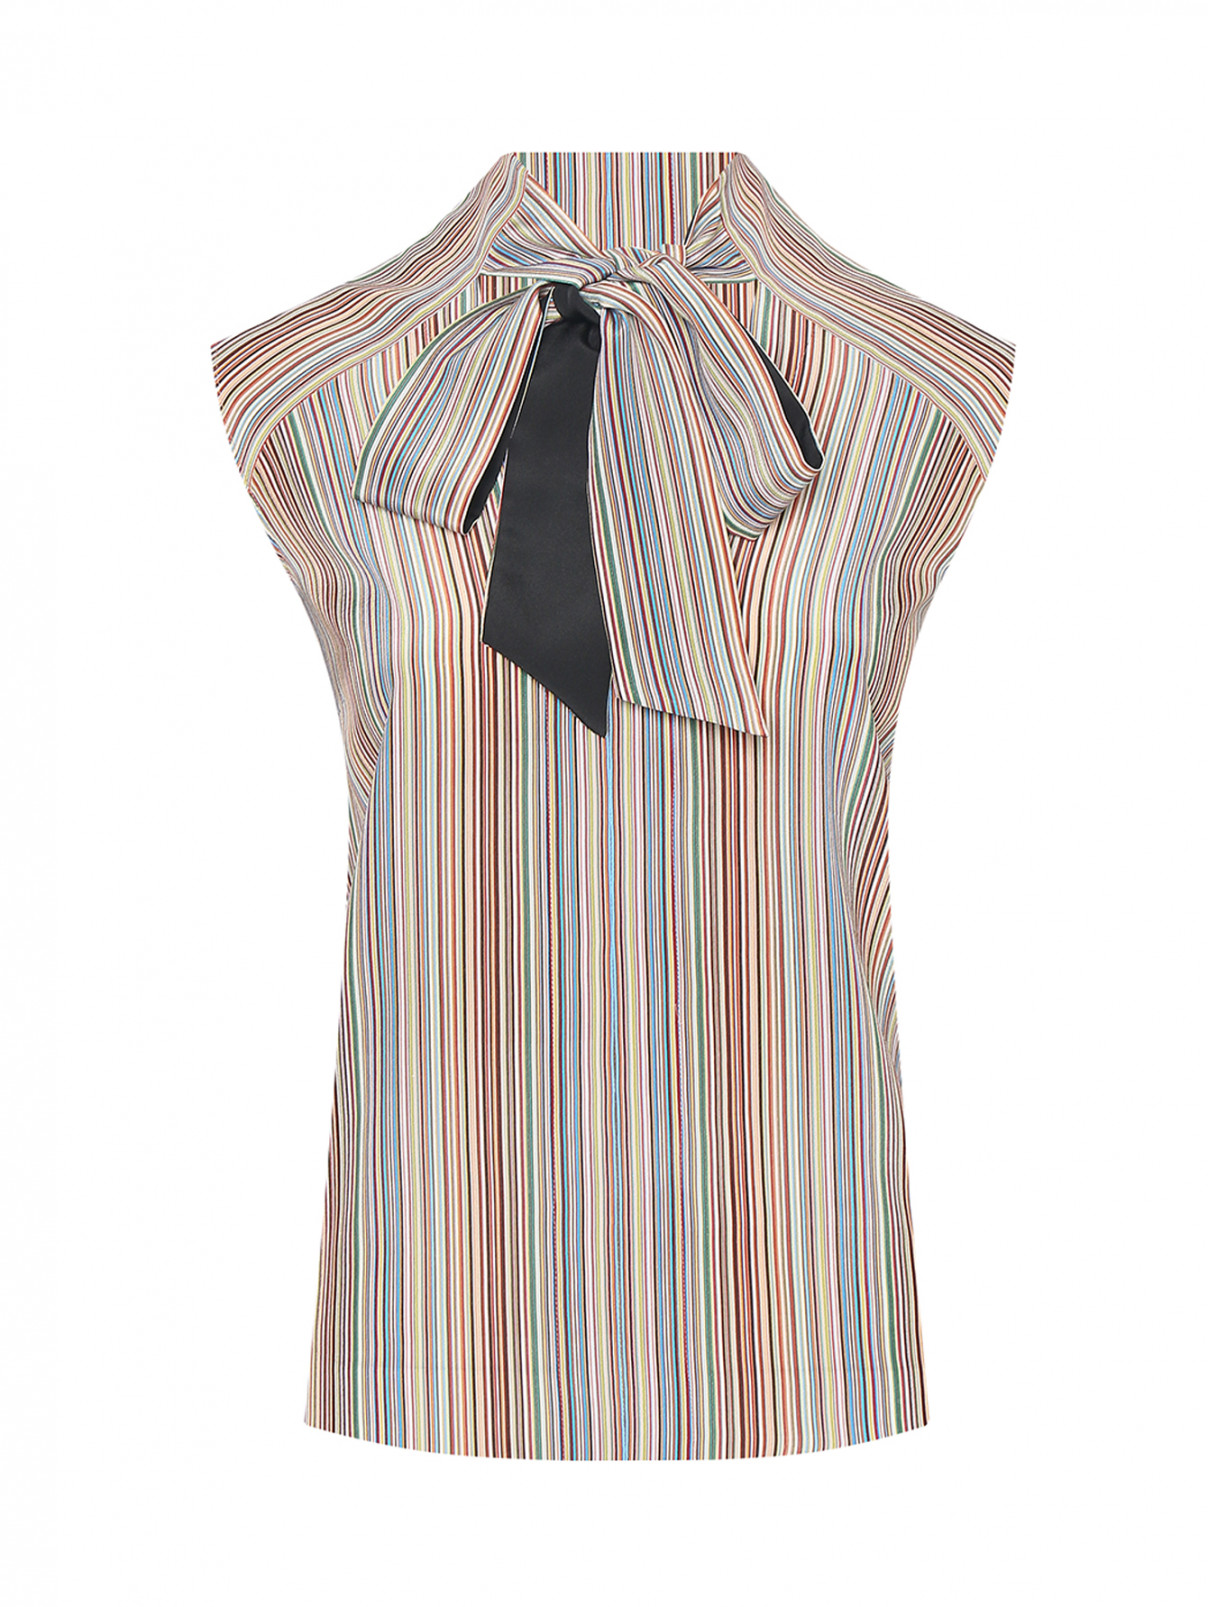 Блуза из шелка с узором Paul Smith  –  Общий вид  – Цвет:  Узор